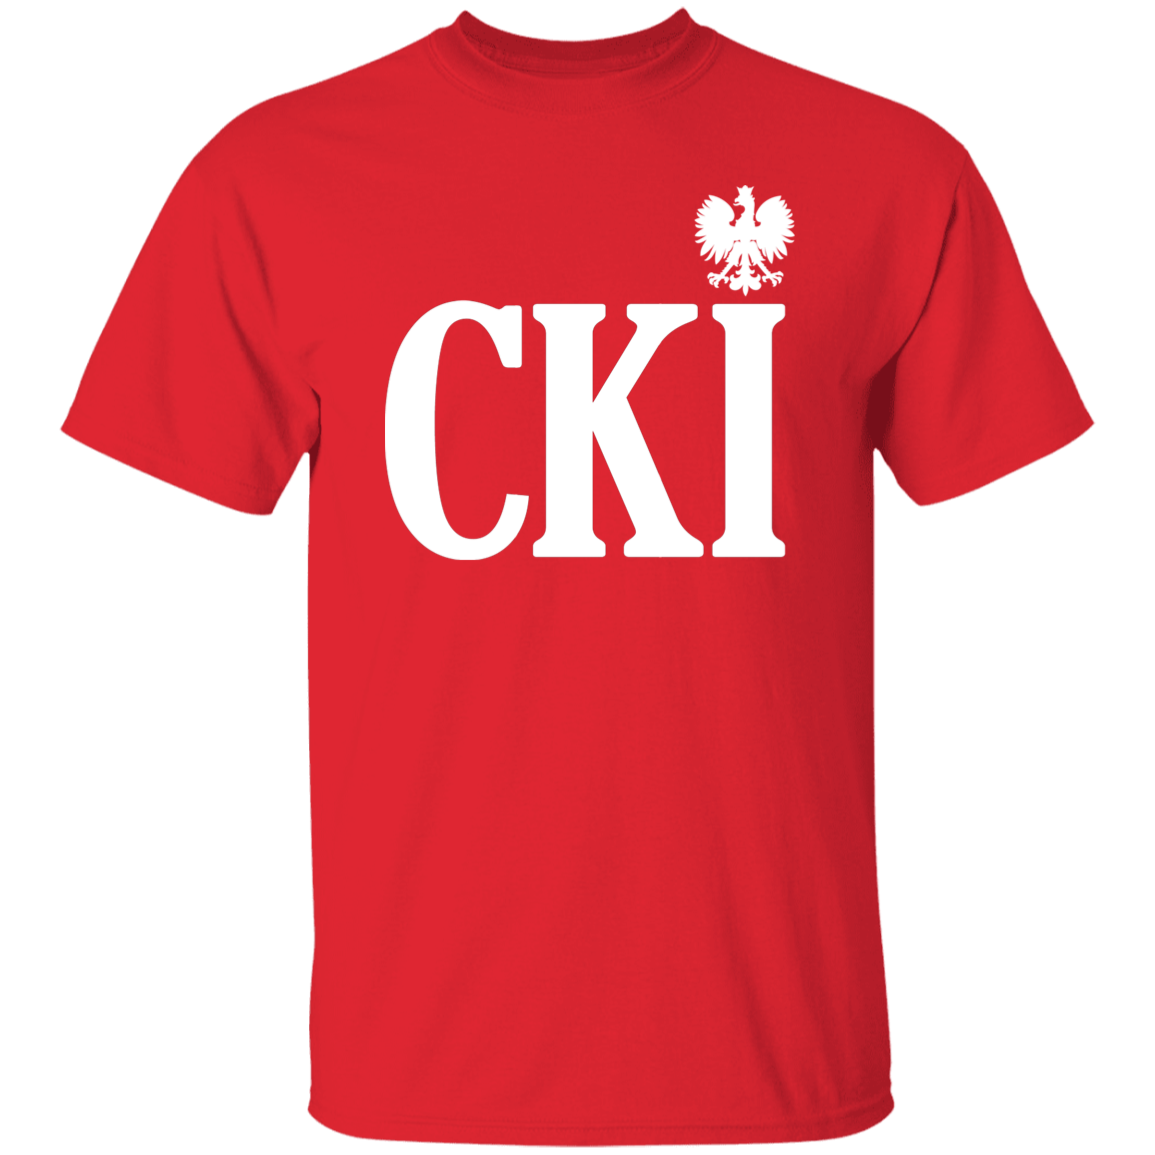 CKI Polish Surname Ending Apparel CustomCat G500 5.3 oz. T-Shirt Red S